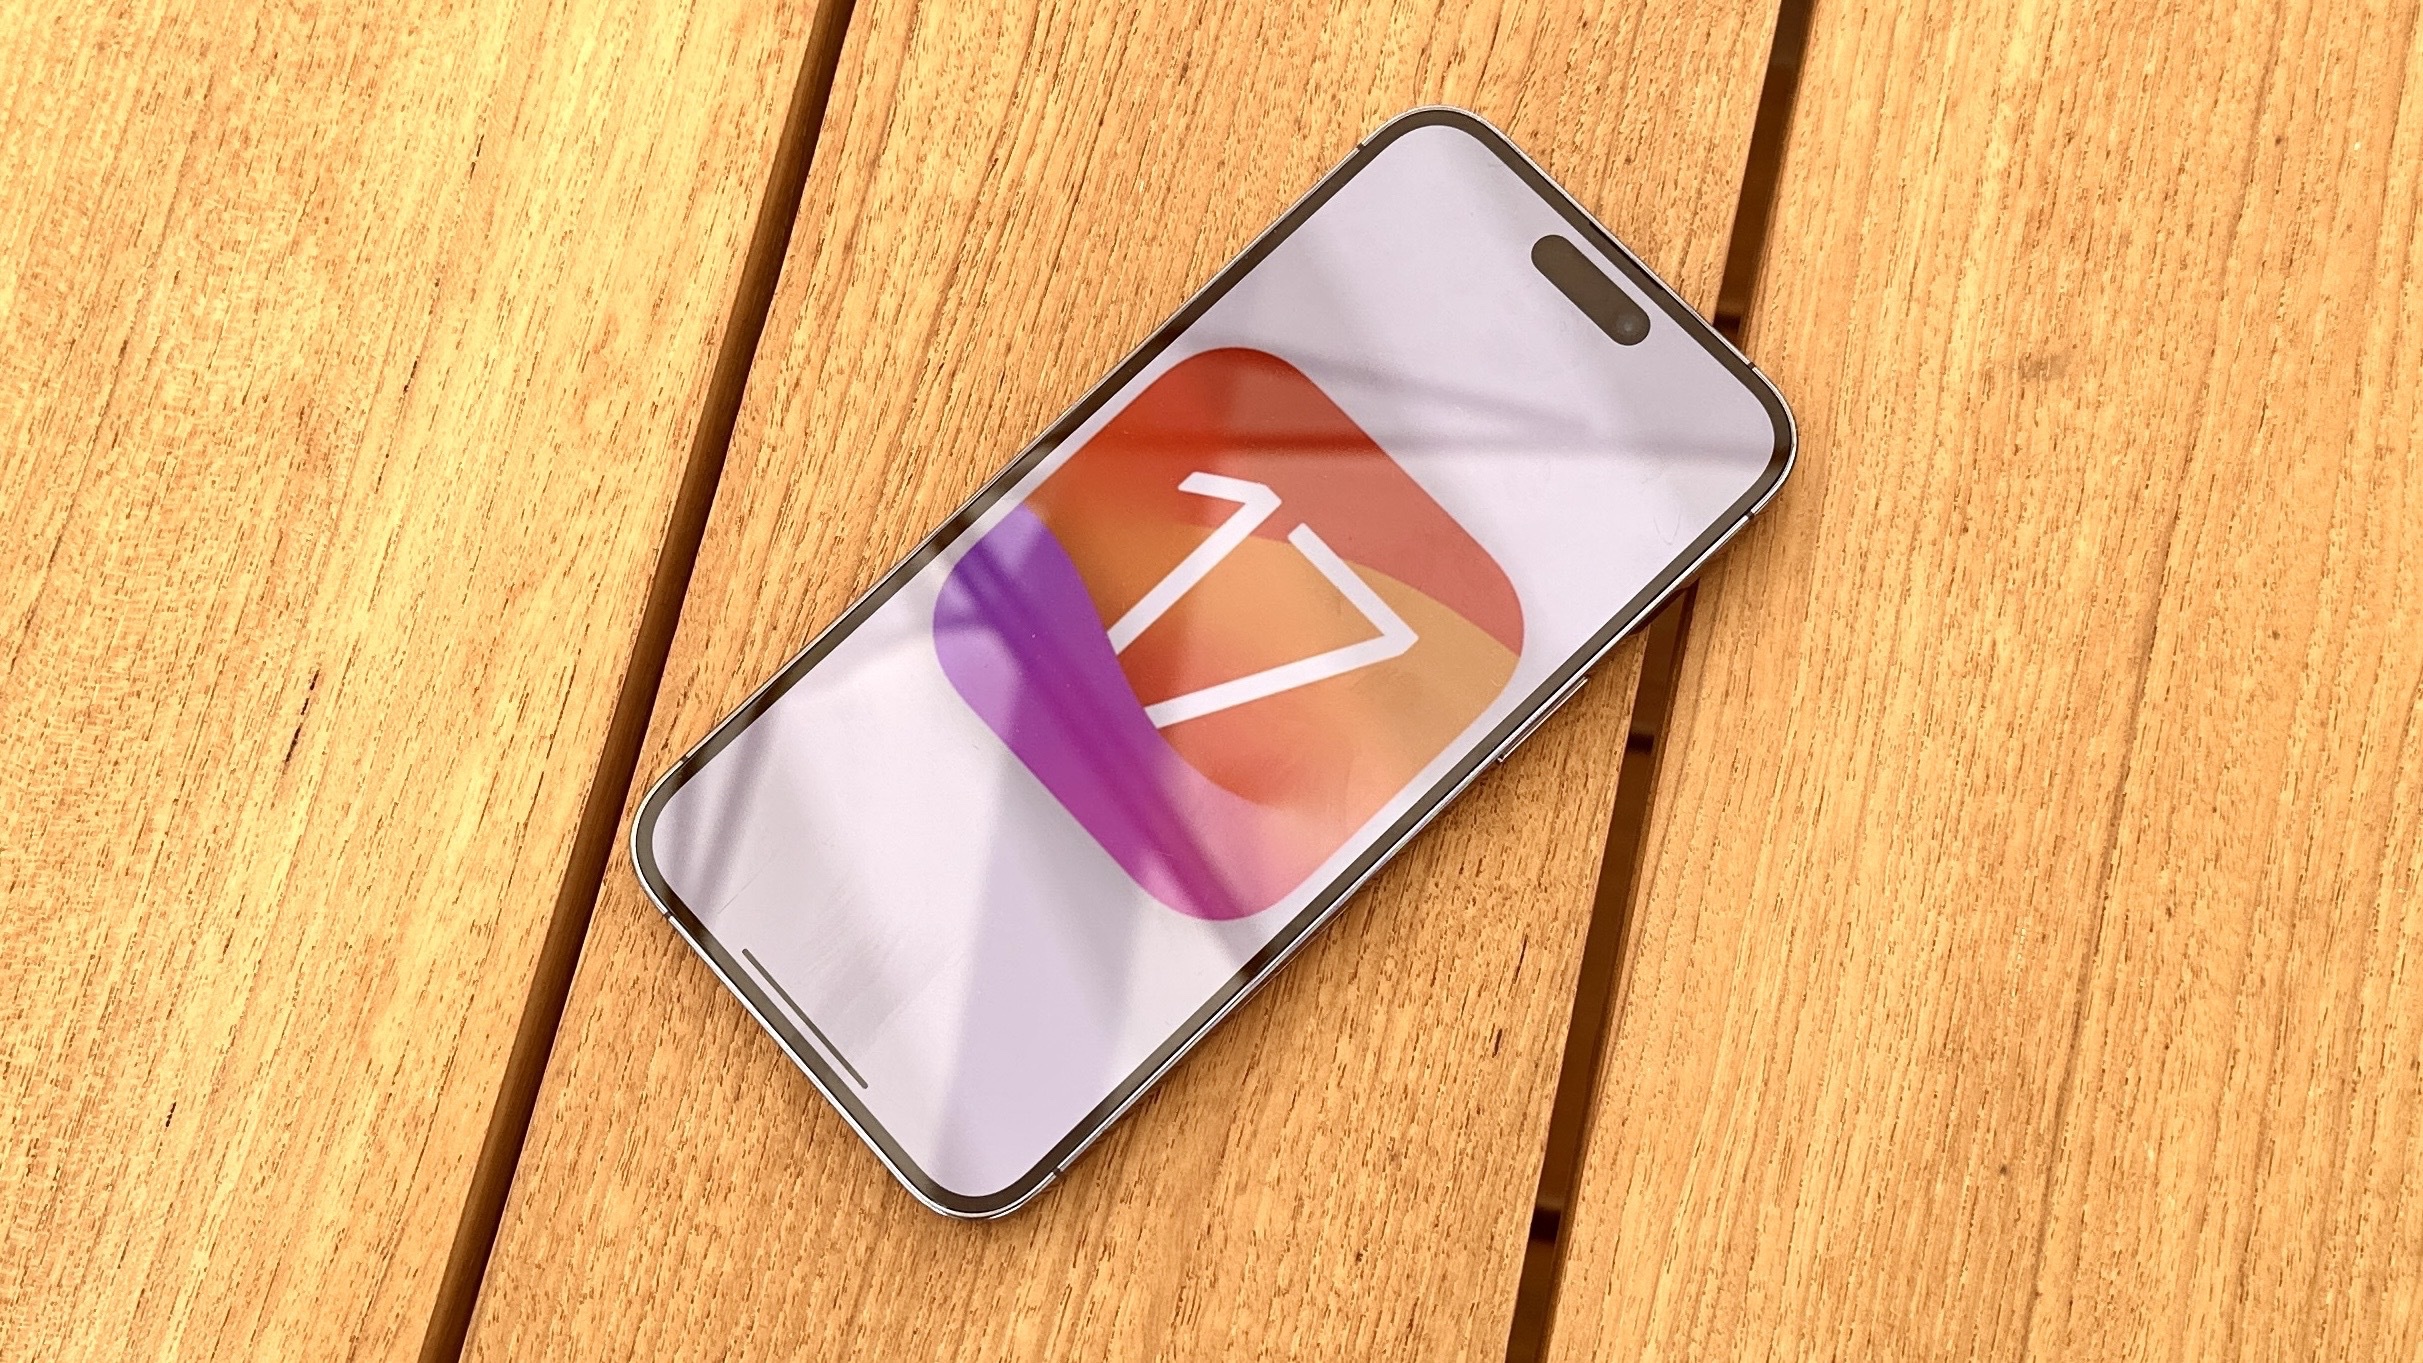 iOS 17 logo on iPhone